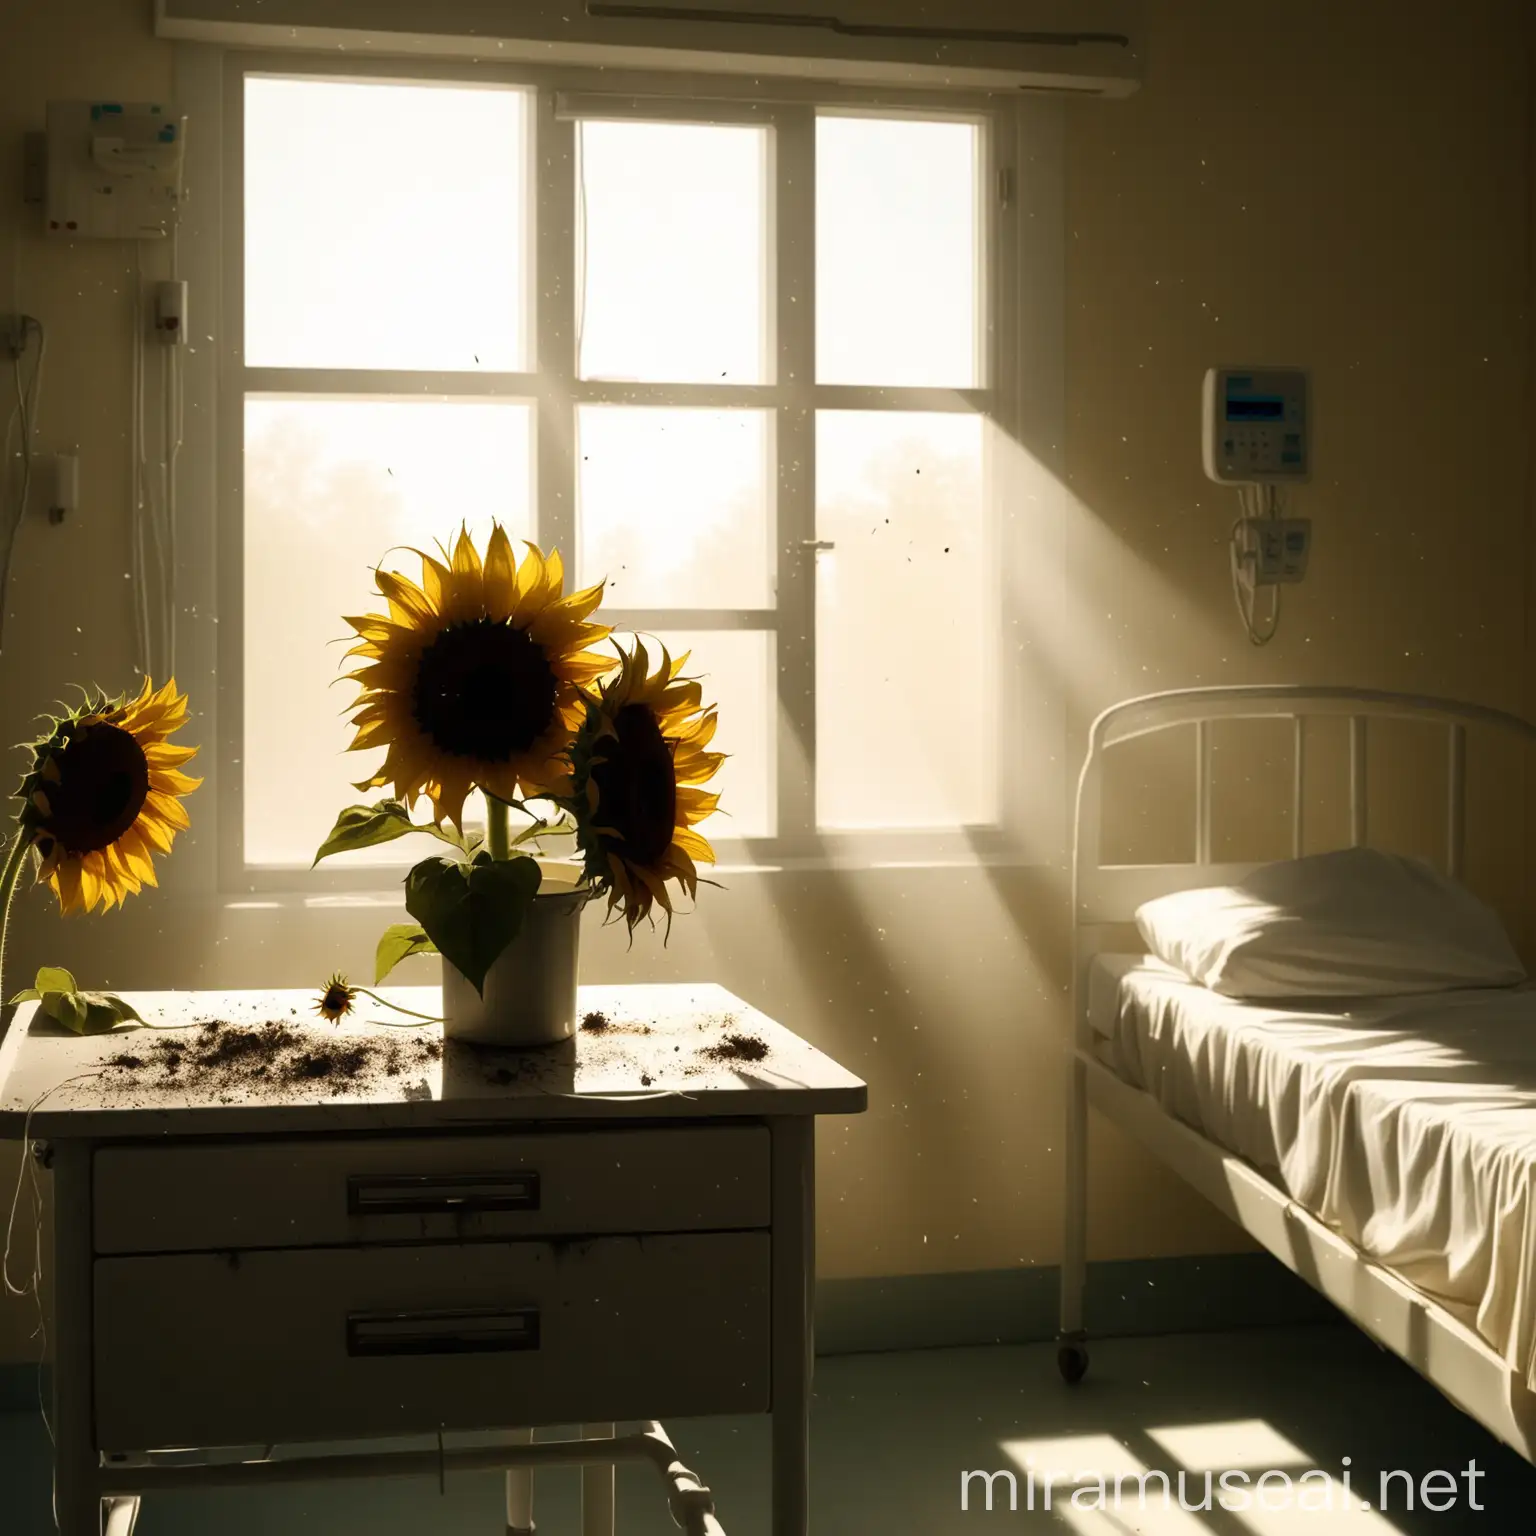 Hospital Room Sunlight and Wilting Sunflower